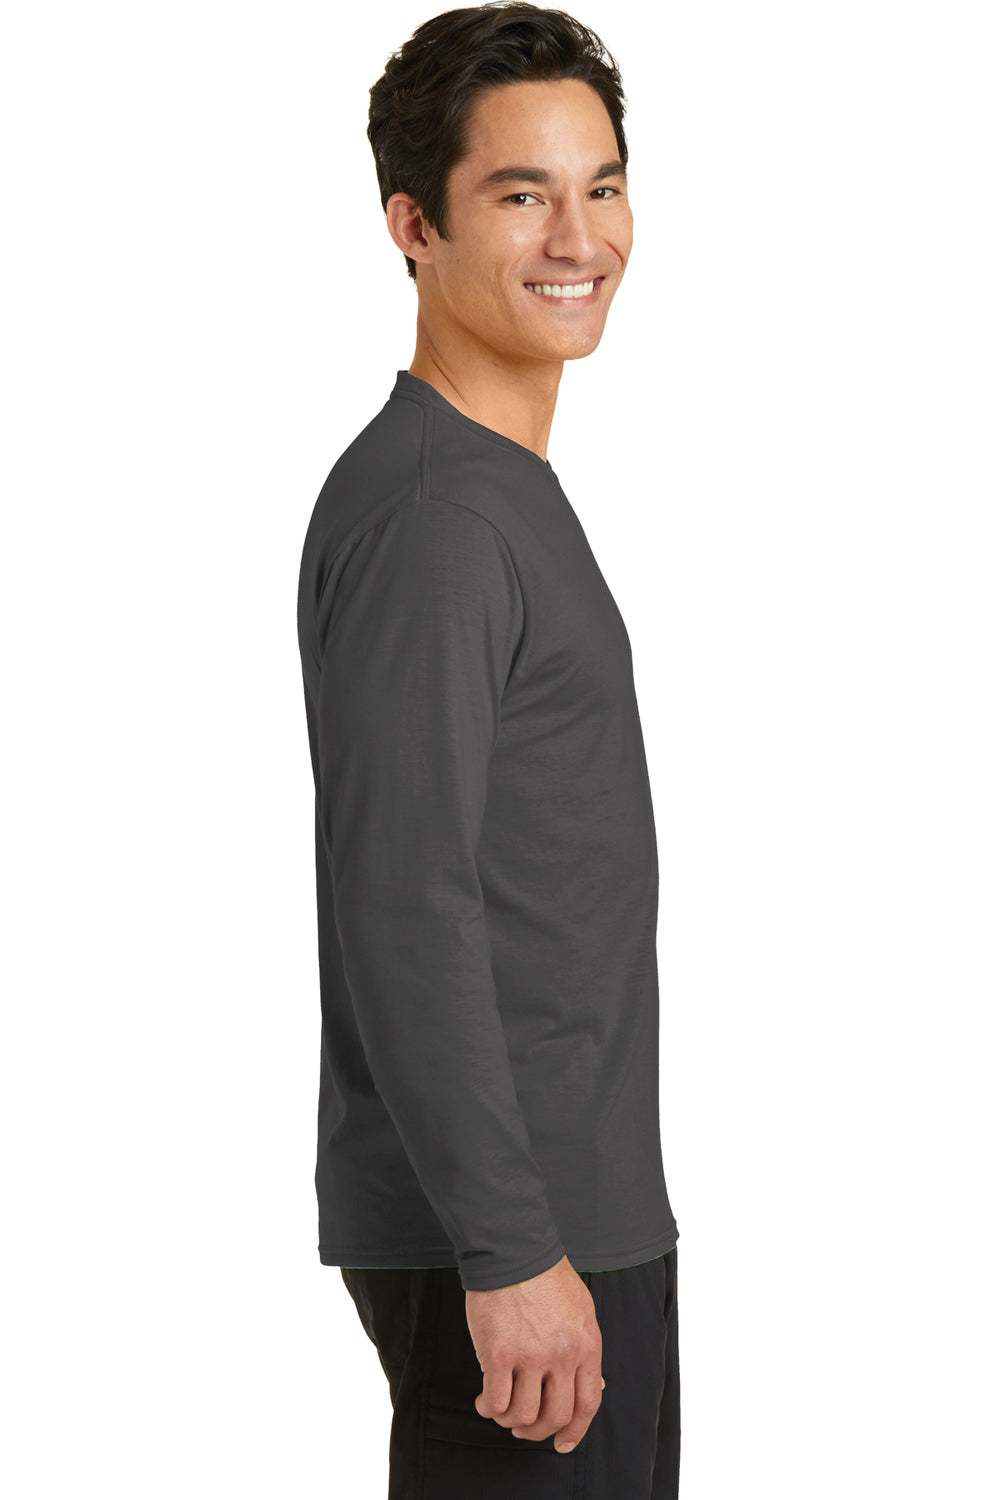 Port & Company PC381LS Mens Dry Zone Performance Moisture Wicking Long Sleeve Crewneck T-Shirt Charcoal Grey Side